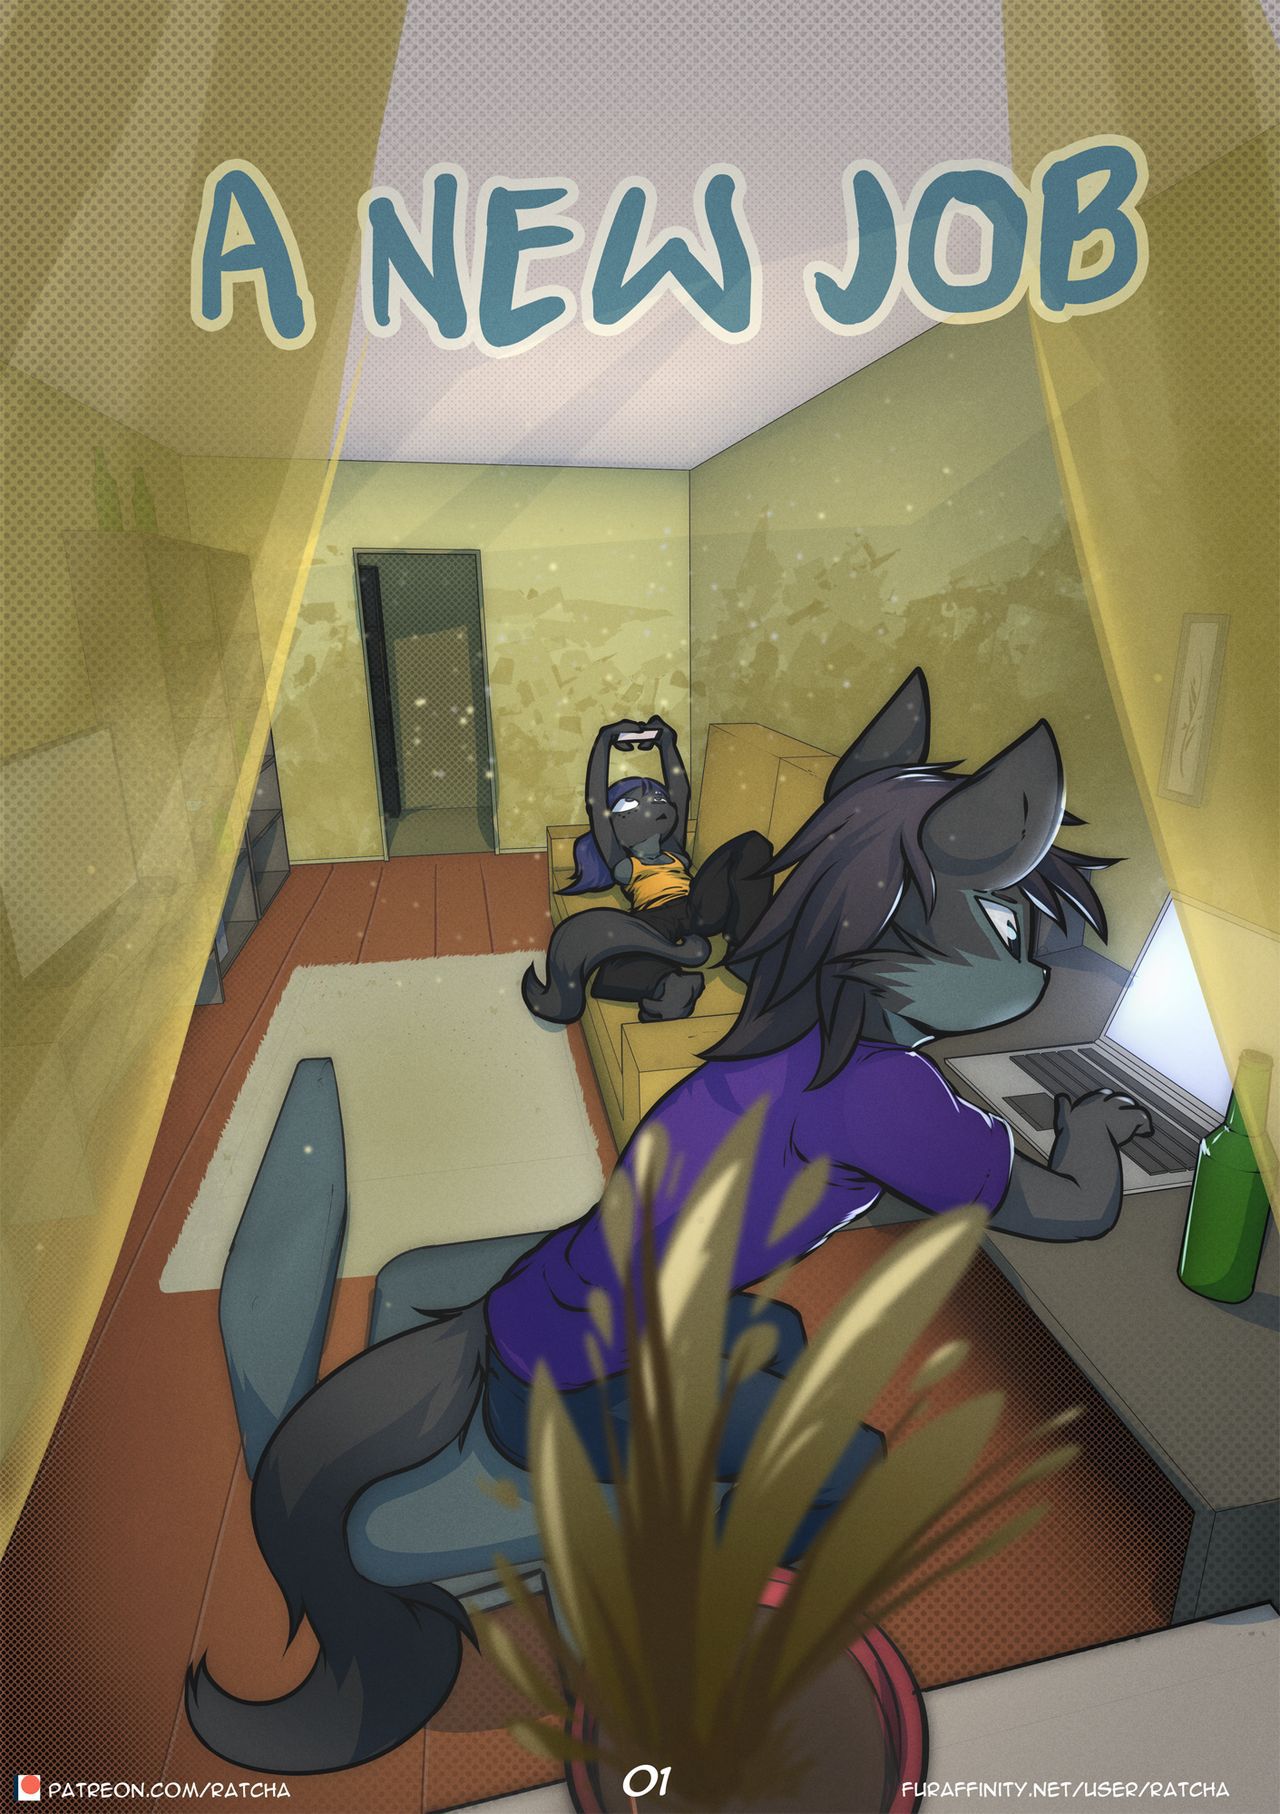 [Ratcha] A New Job (updated 12-29-17) 1